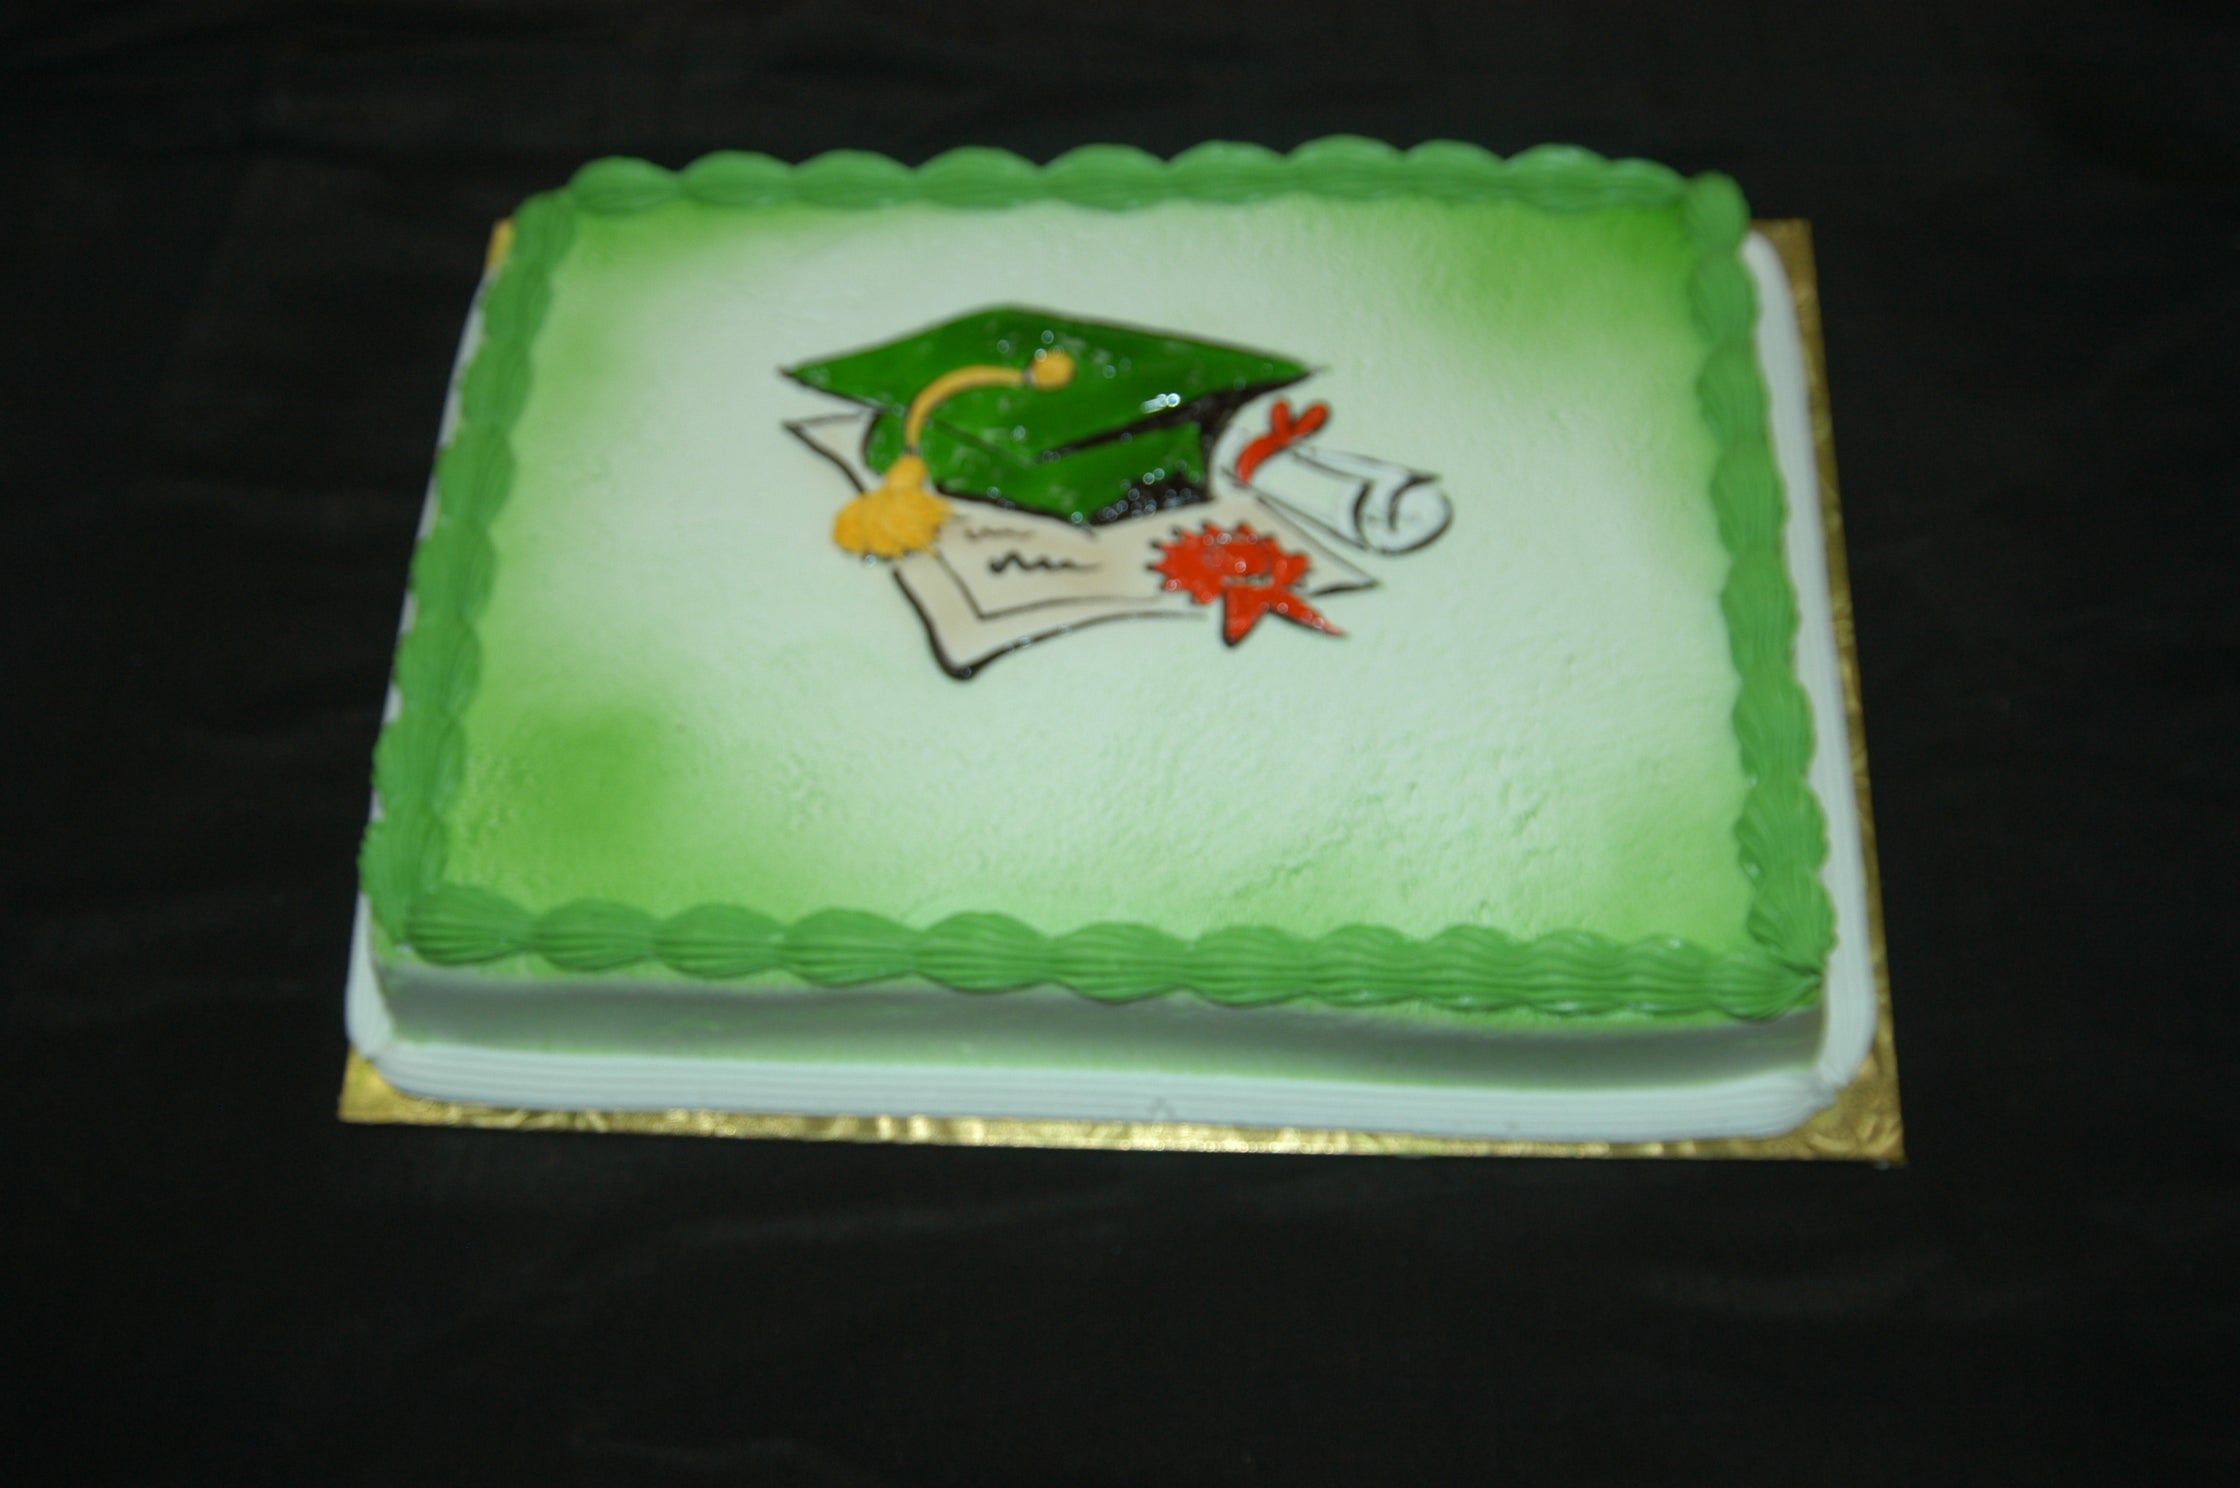 McArthur's Bakery Custom Cake with Graduation Cap, Tassel, and Diploma